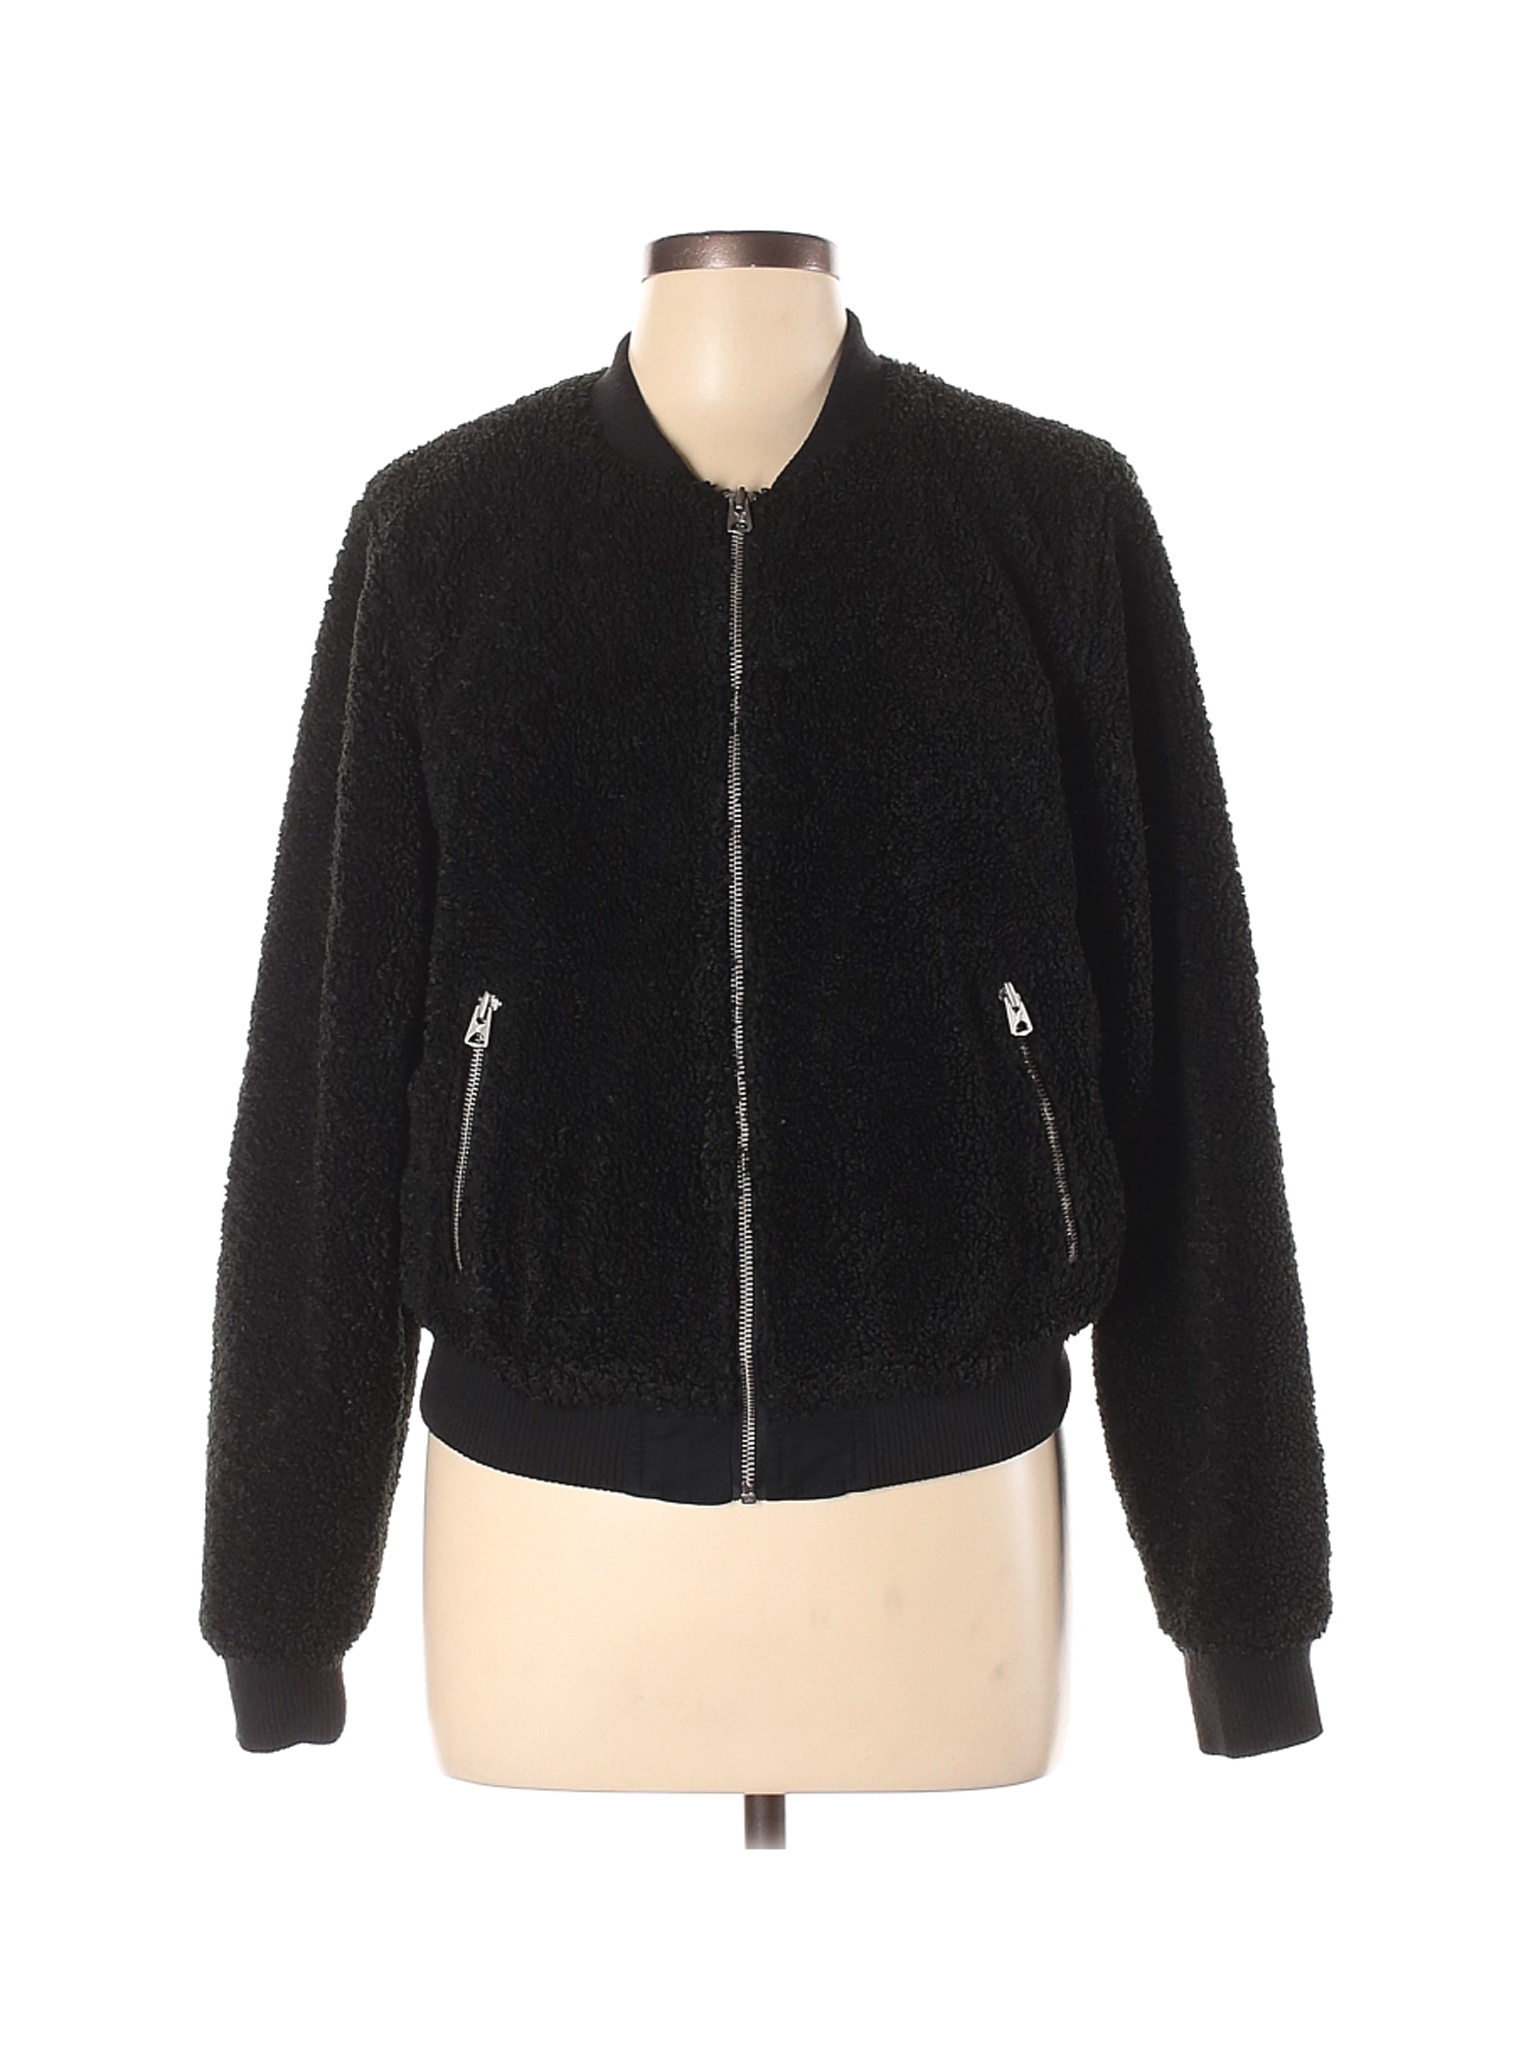 American Eagle Outfitters Women Black Jacket L | eBay